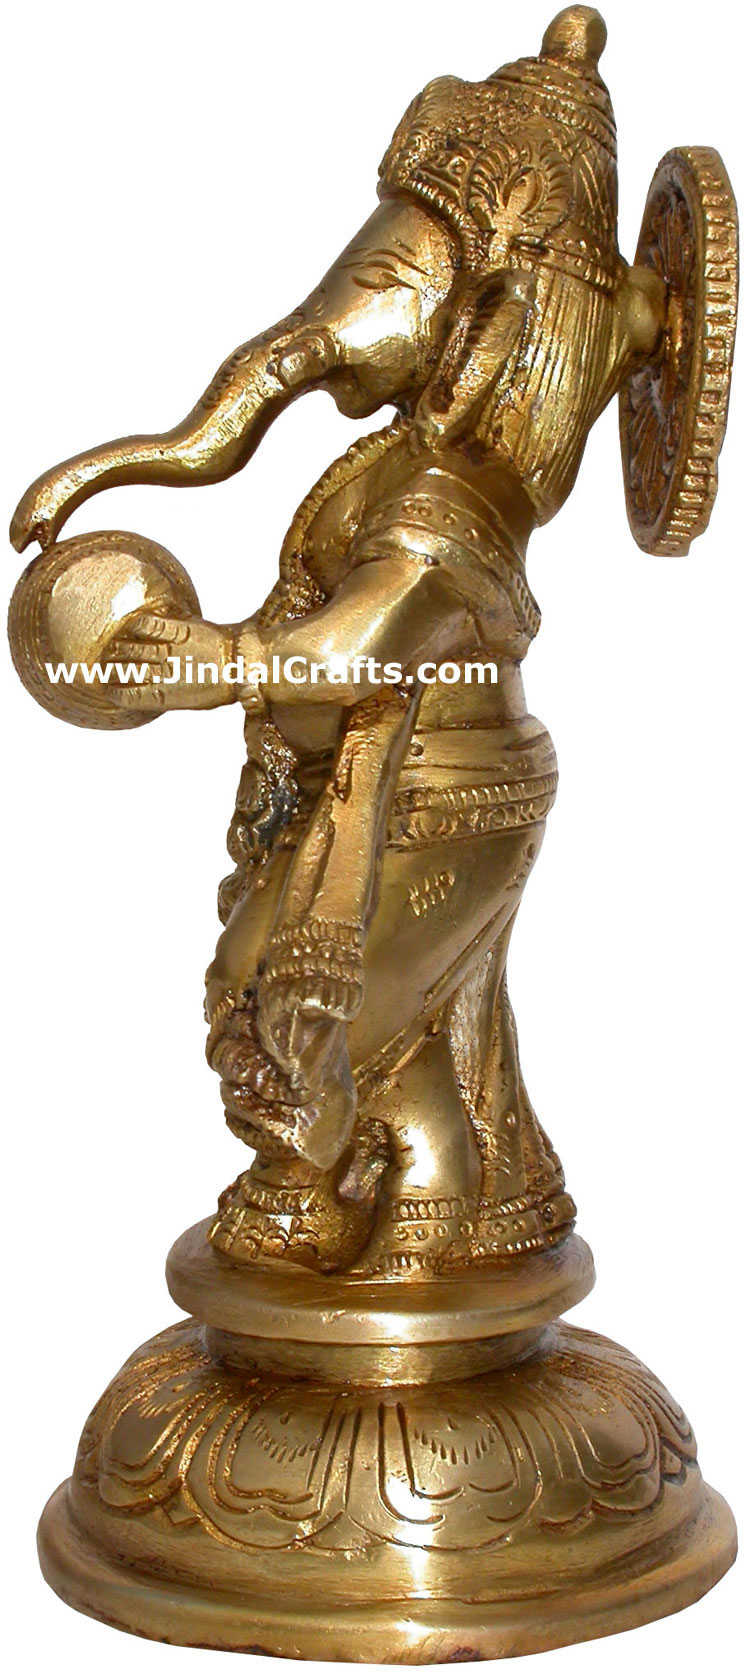 Brass Musician Lord Ganesha India Artifacts